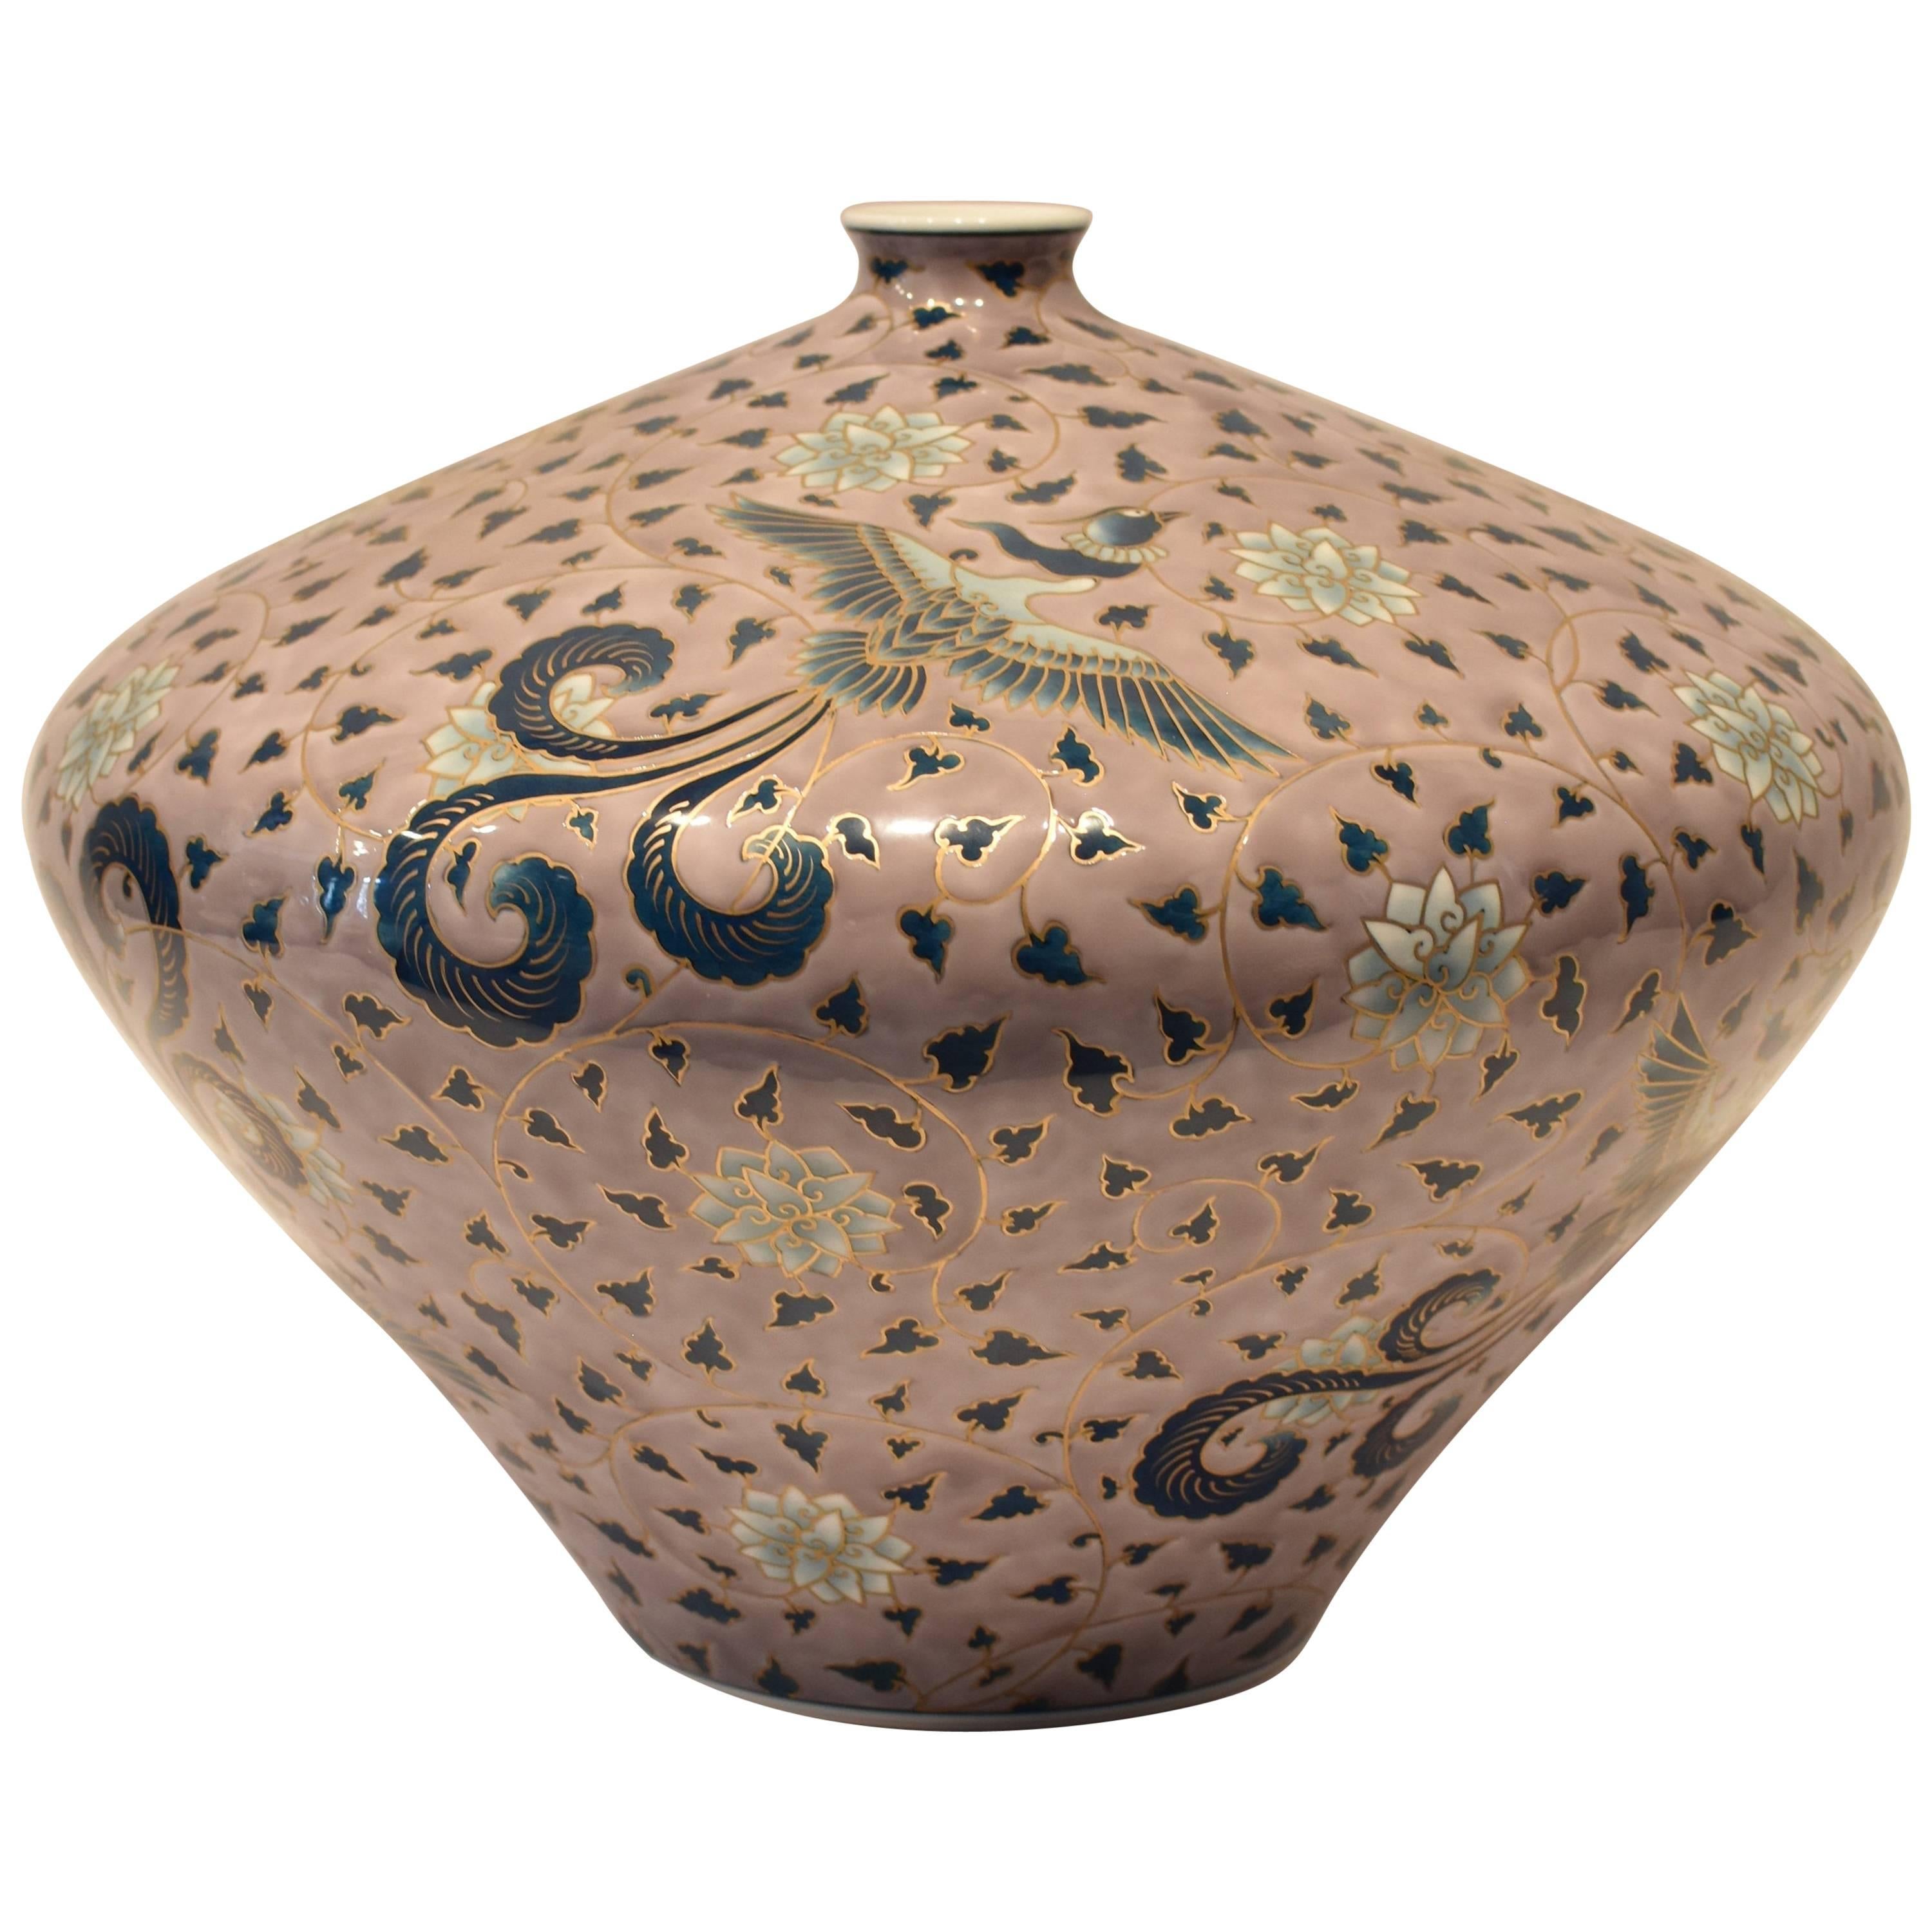 Large Japanese Gilded Hand-Painted Porcelain Vase by Master Artist